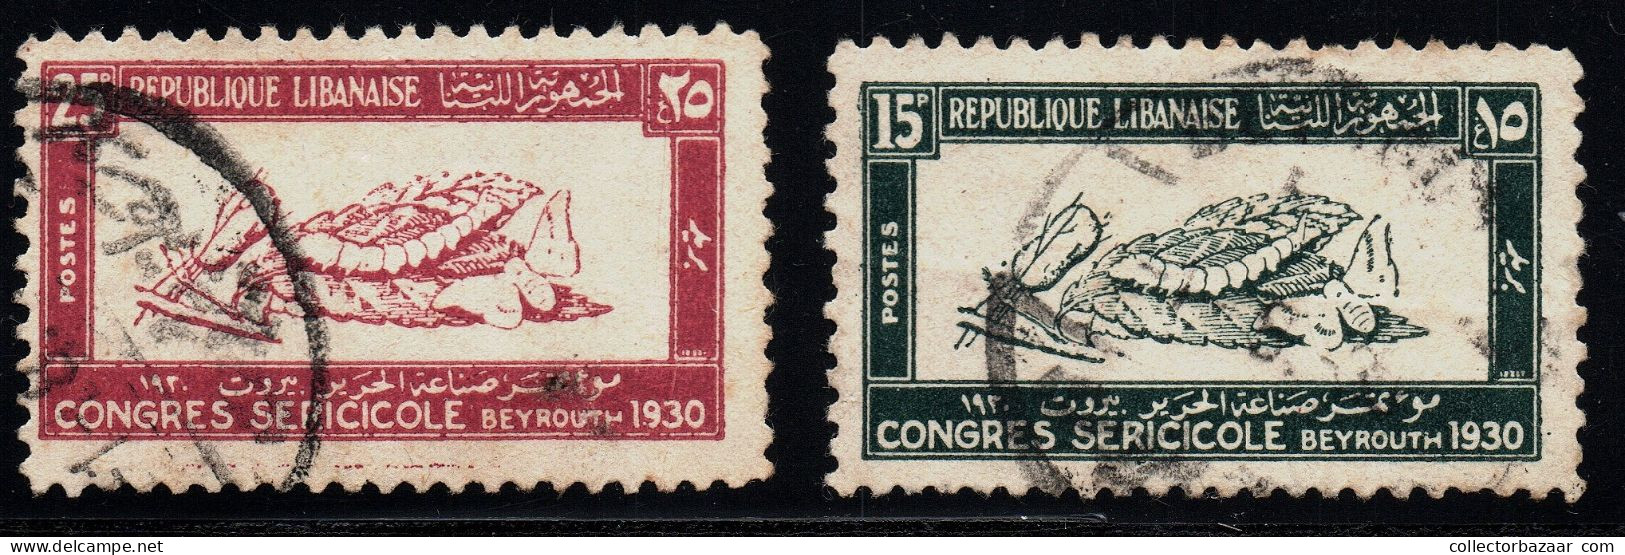 Liban Lebanon Silk Moth Michel 163-164 Used Scott 112 - 113 Very Nice Stamps Cv$25 - Líbano